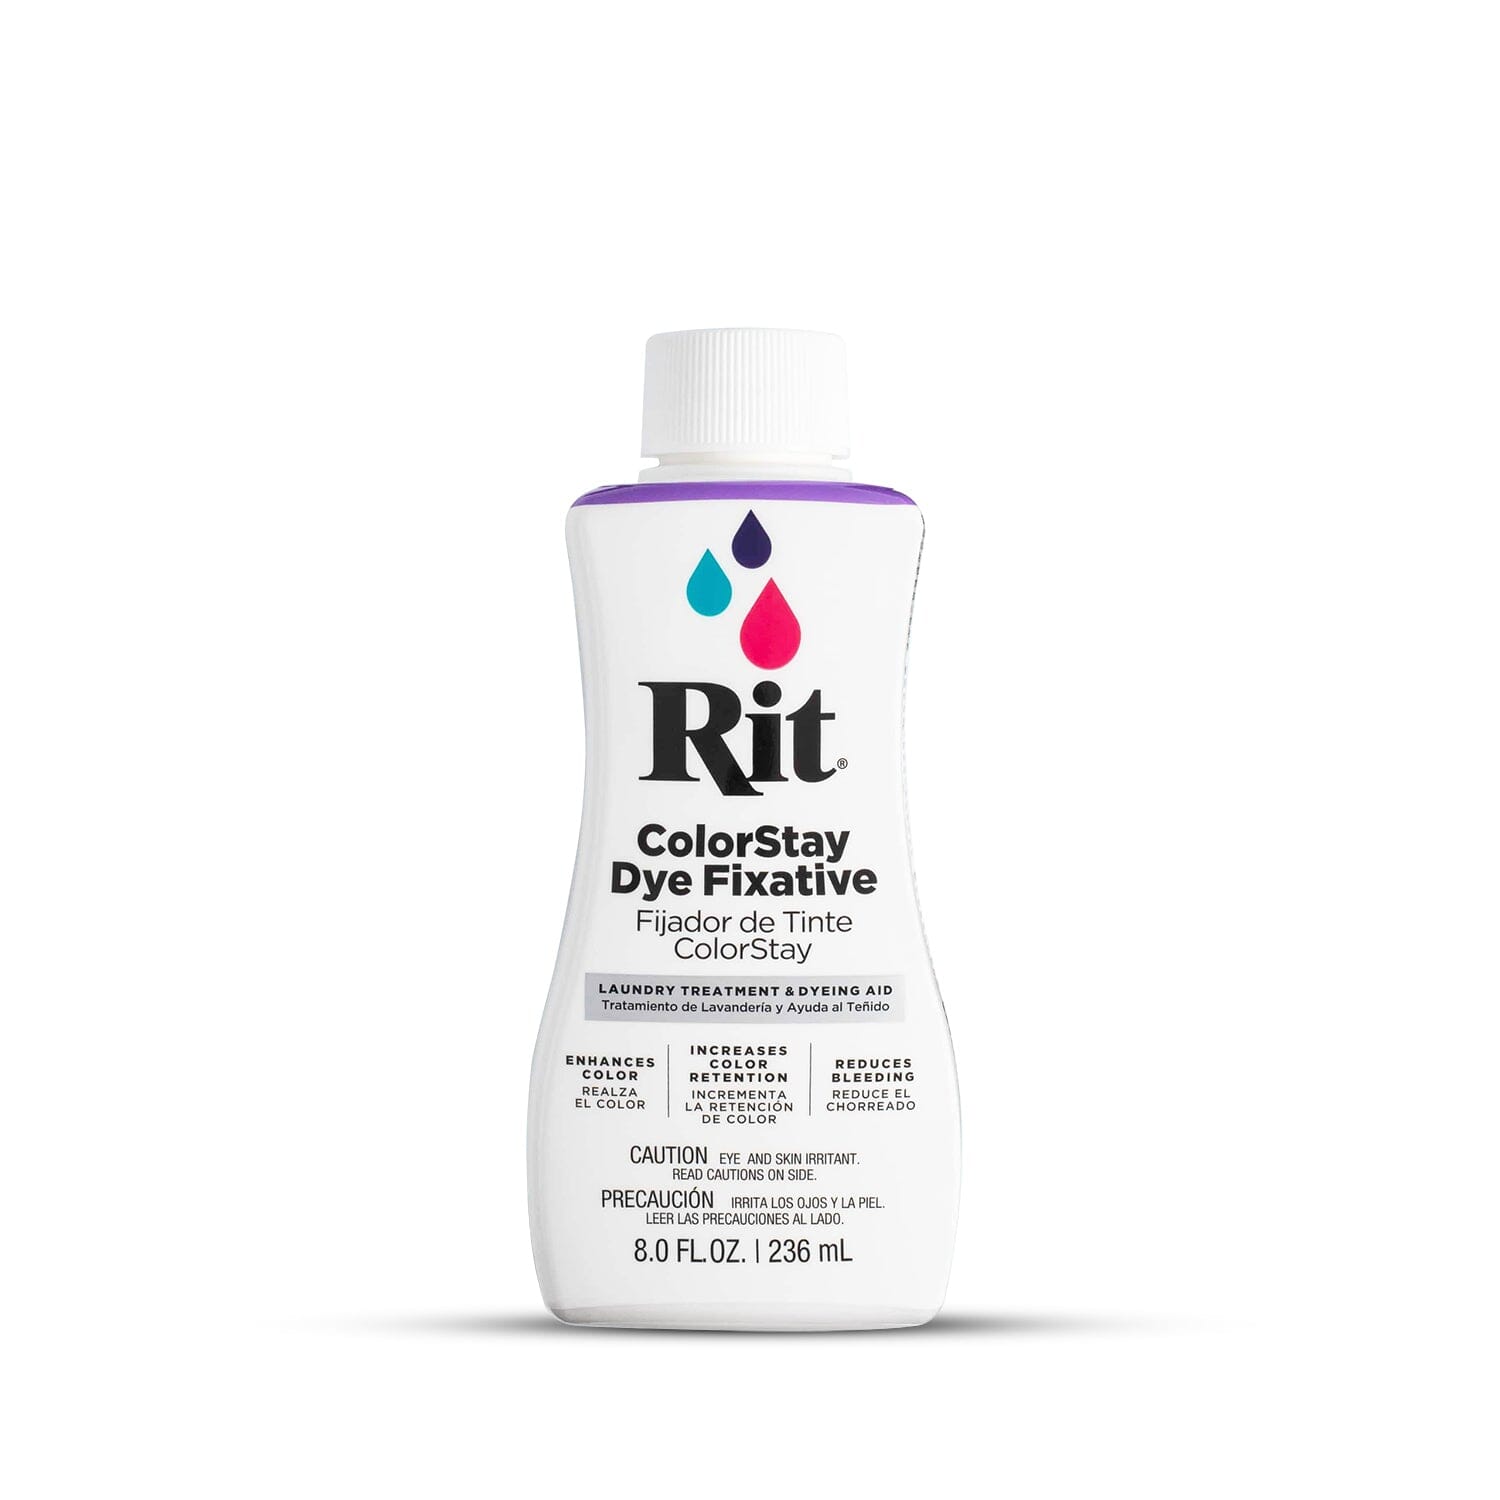 Rit Laundry Treatment Whitener and Brightener Powder 1 oz, 2 Pack 